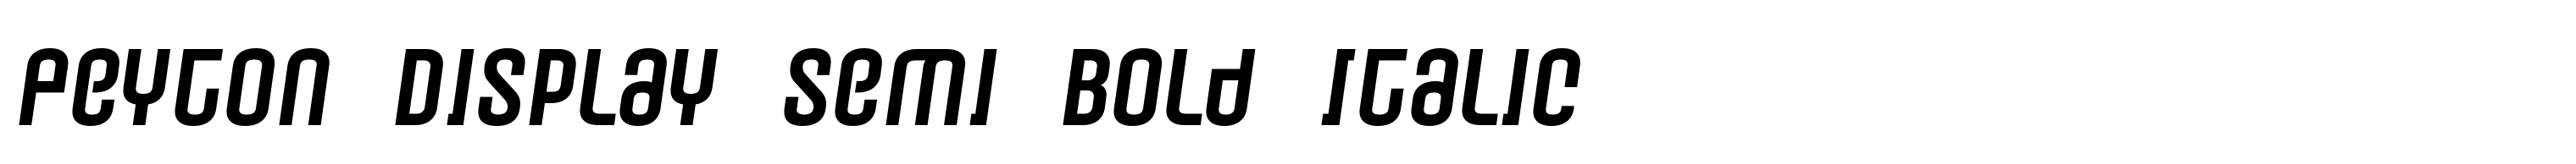 Peyton Display Semi Bold Italic